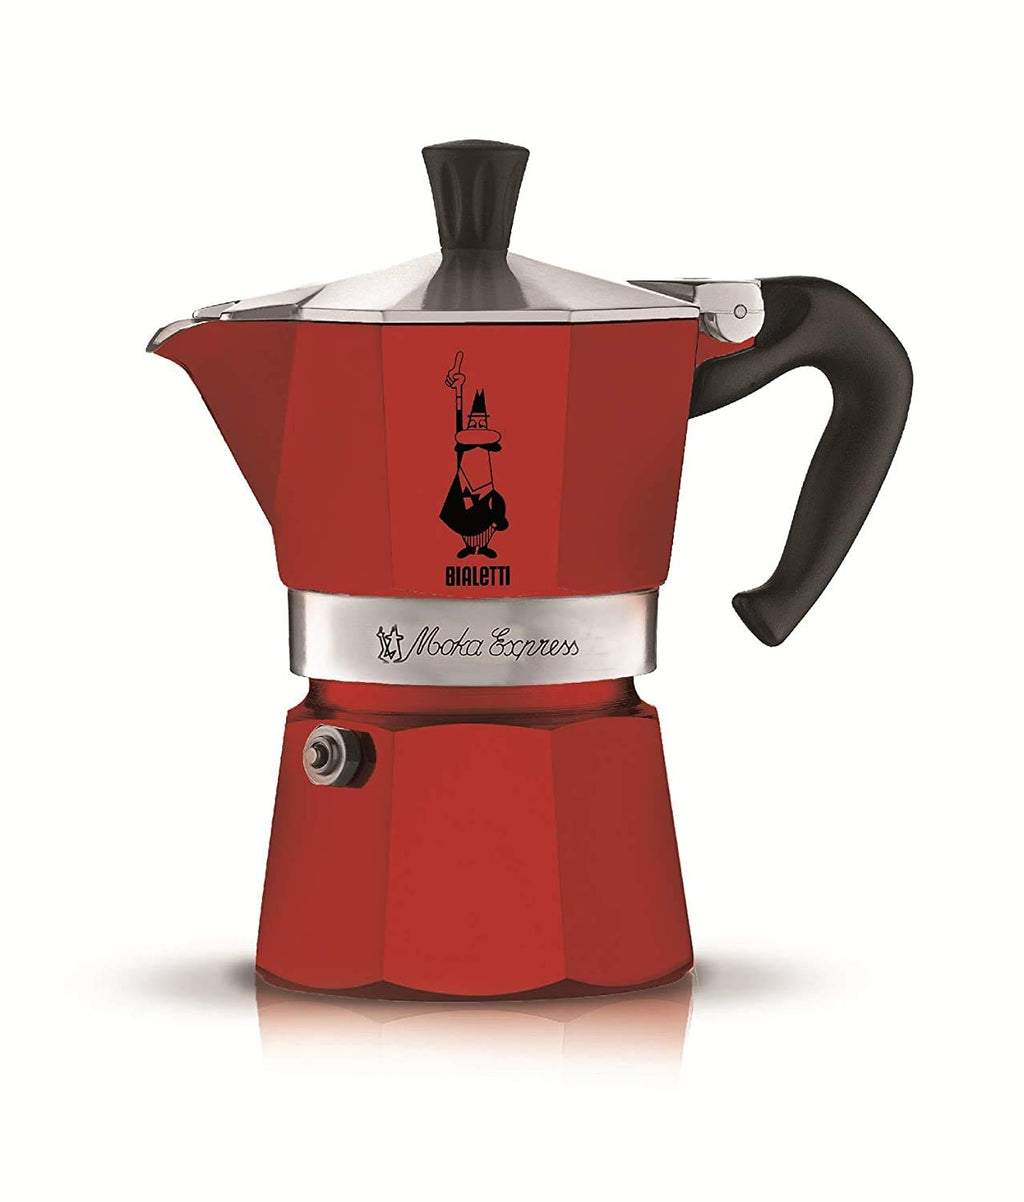 Bialetti Moka Express Red 3 Cups Coffee Maker